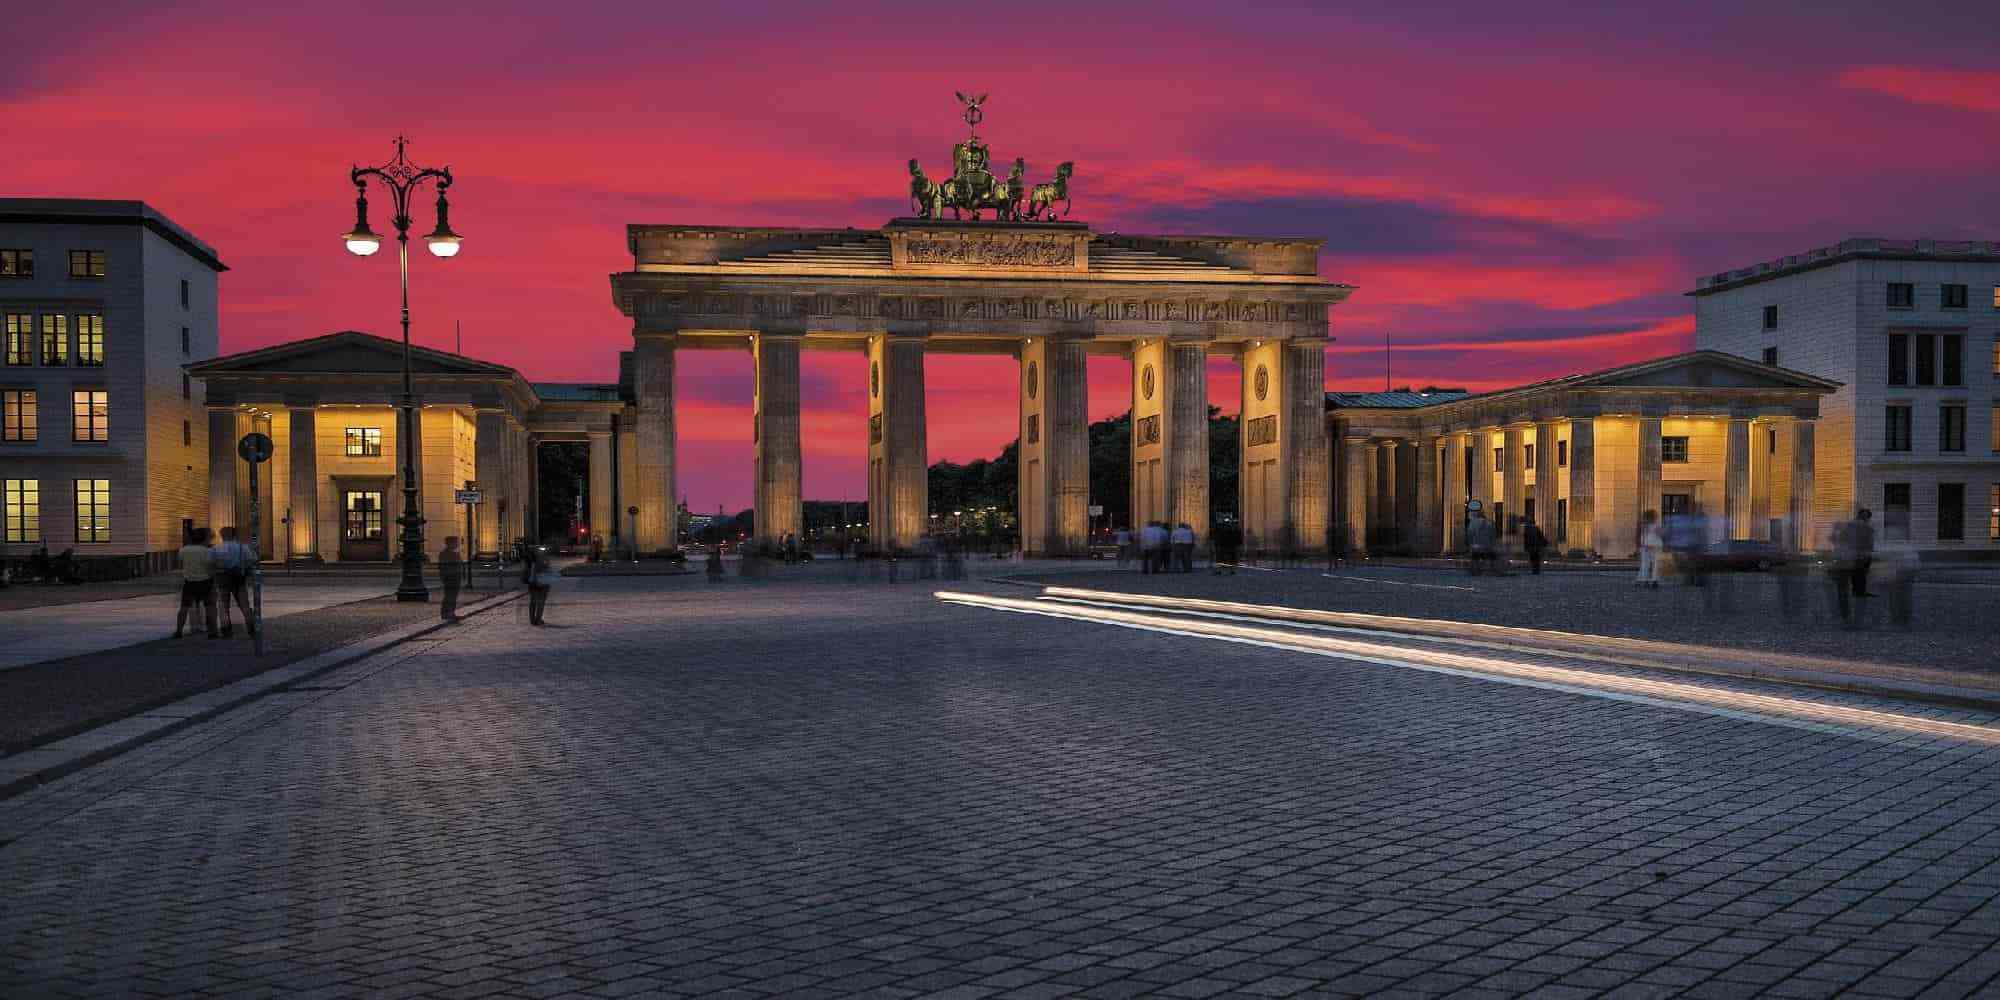 H Πύλη του Βρανδεμβούργου, στο Βερολίνο την πρωτεύουσα της Γερμανίας